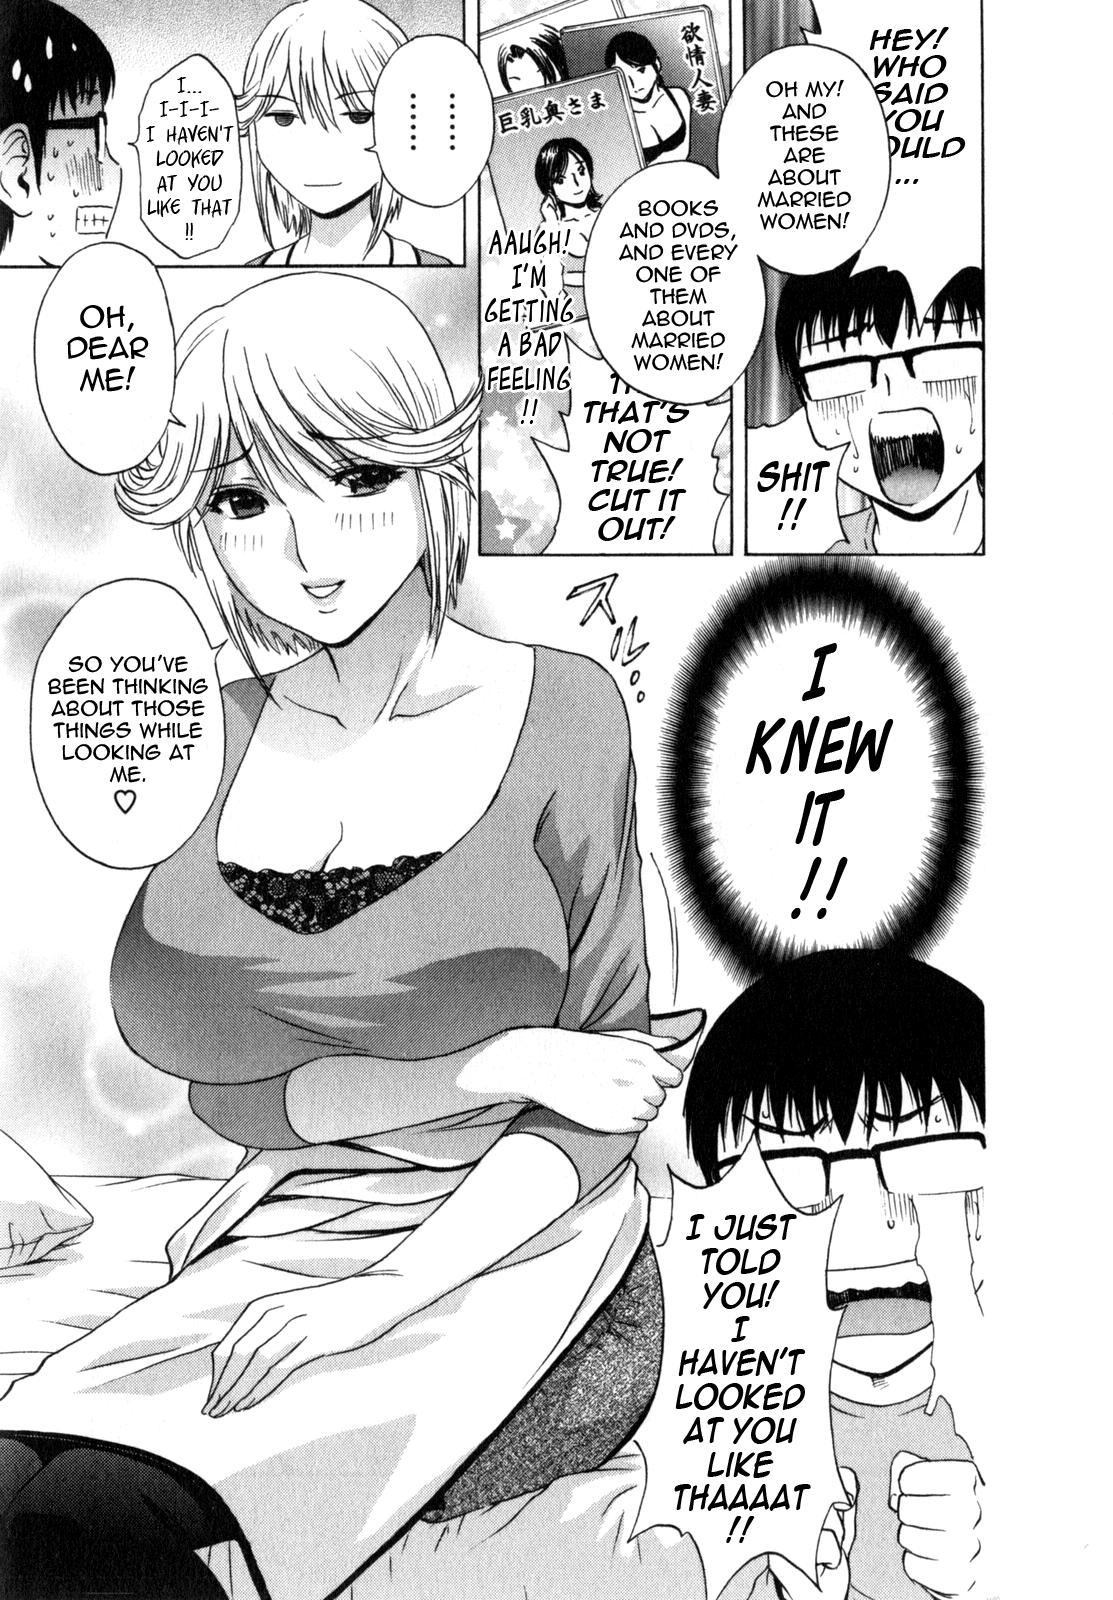 [Hidemaru] Life with Married Women Just Like a Manga 1 - Ch. 1-9 [English] {Tadanohito} 30